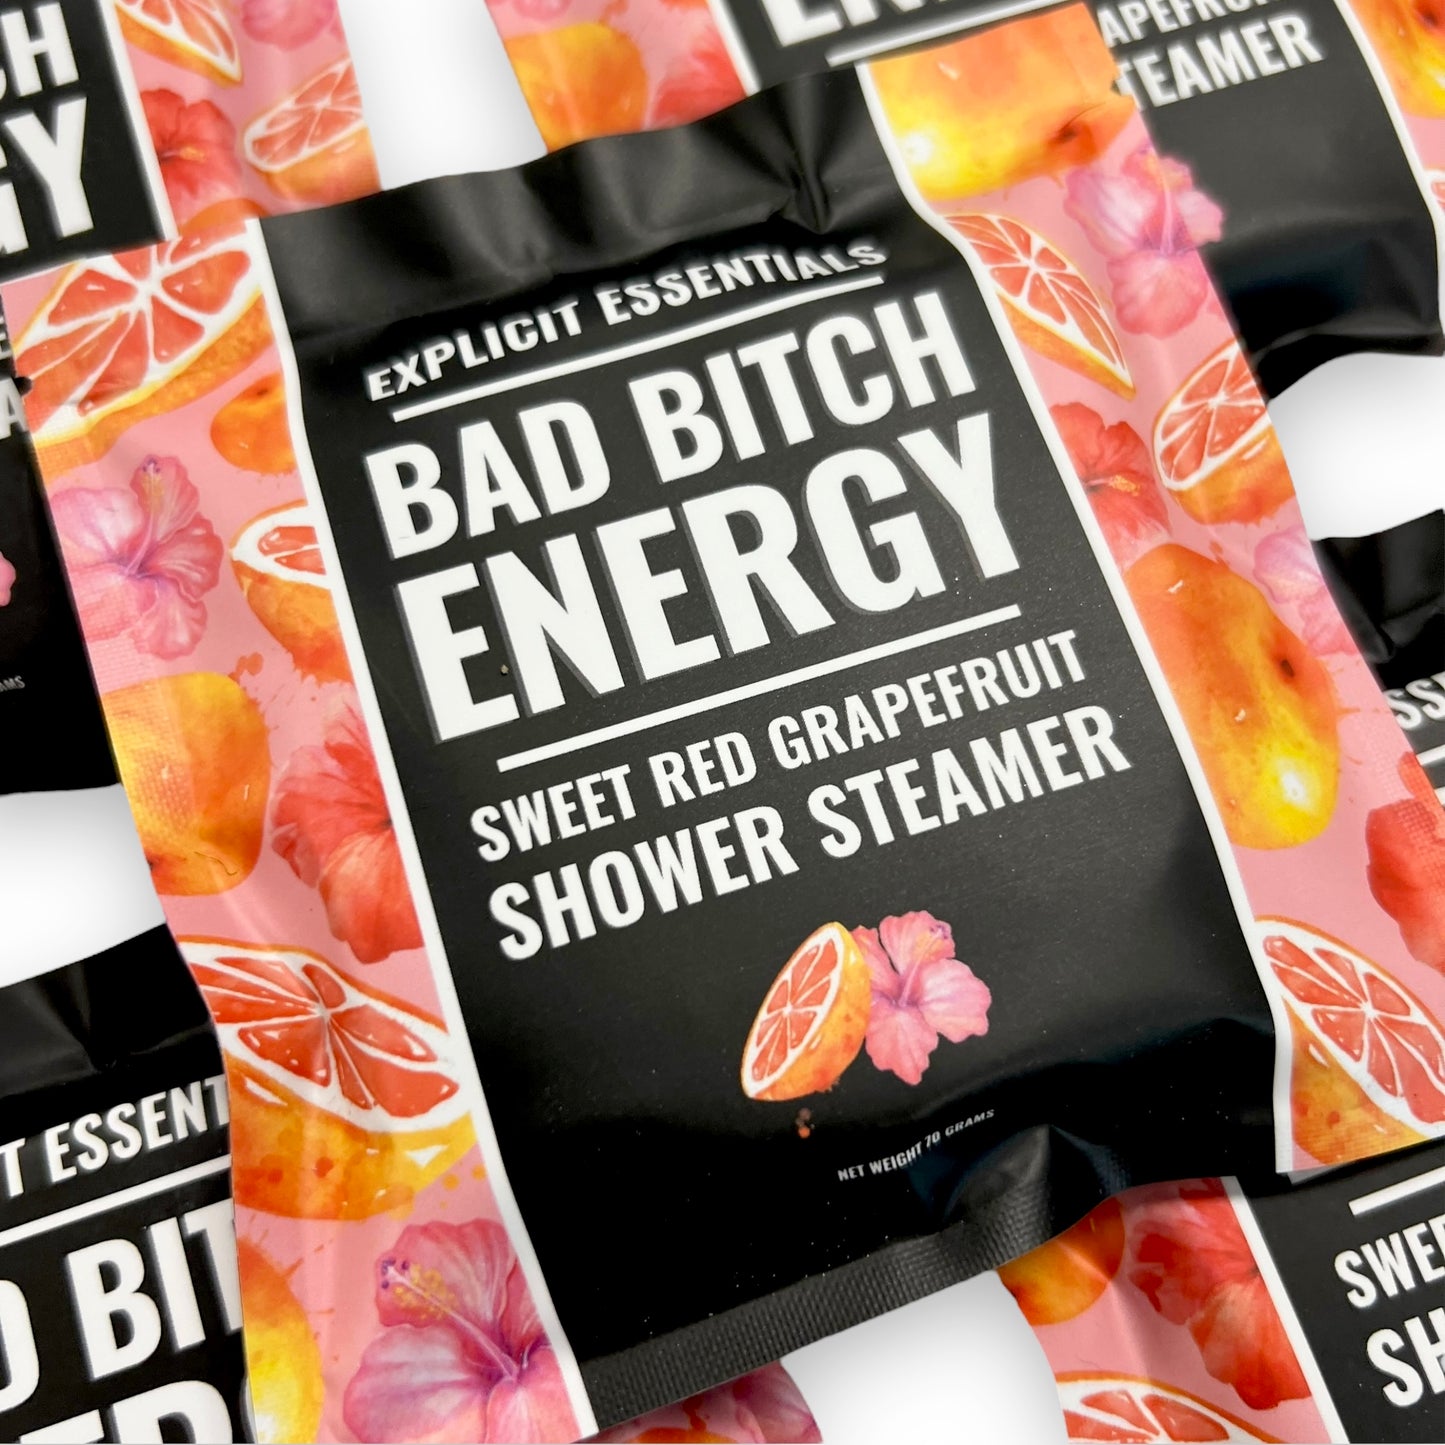 Bad Bitch Energy Shower Puck